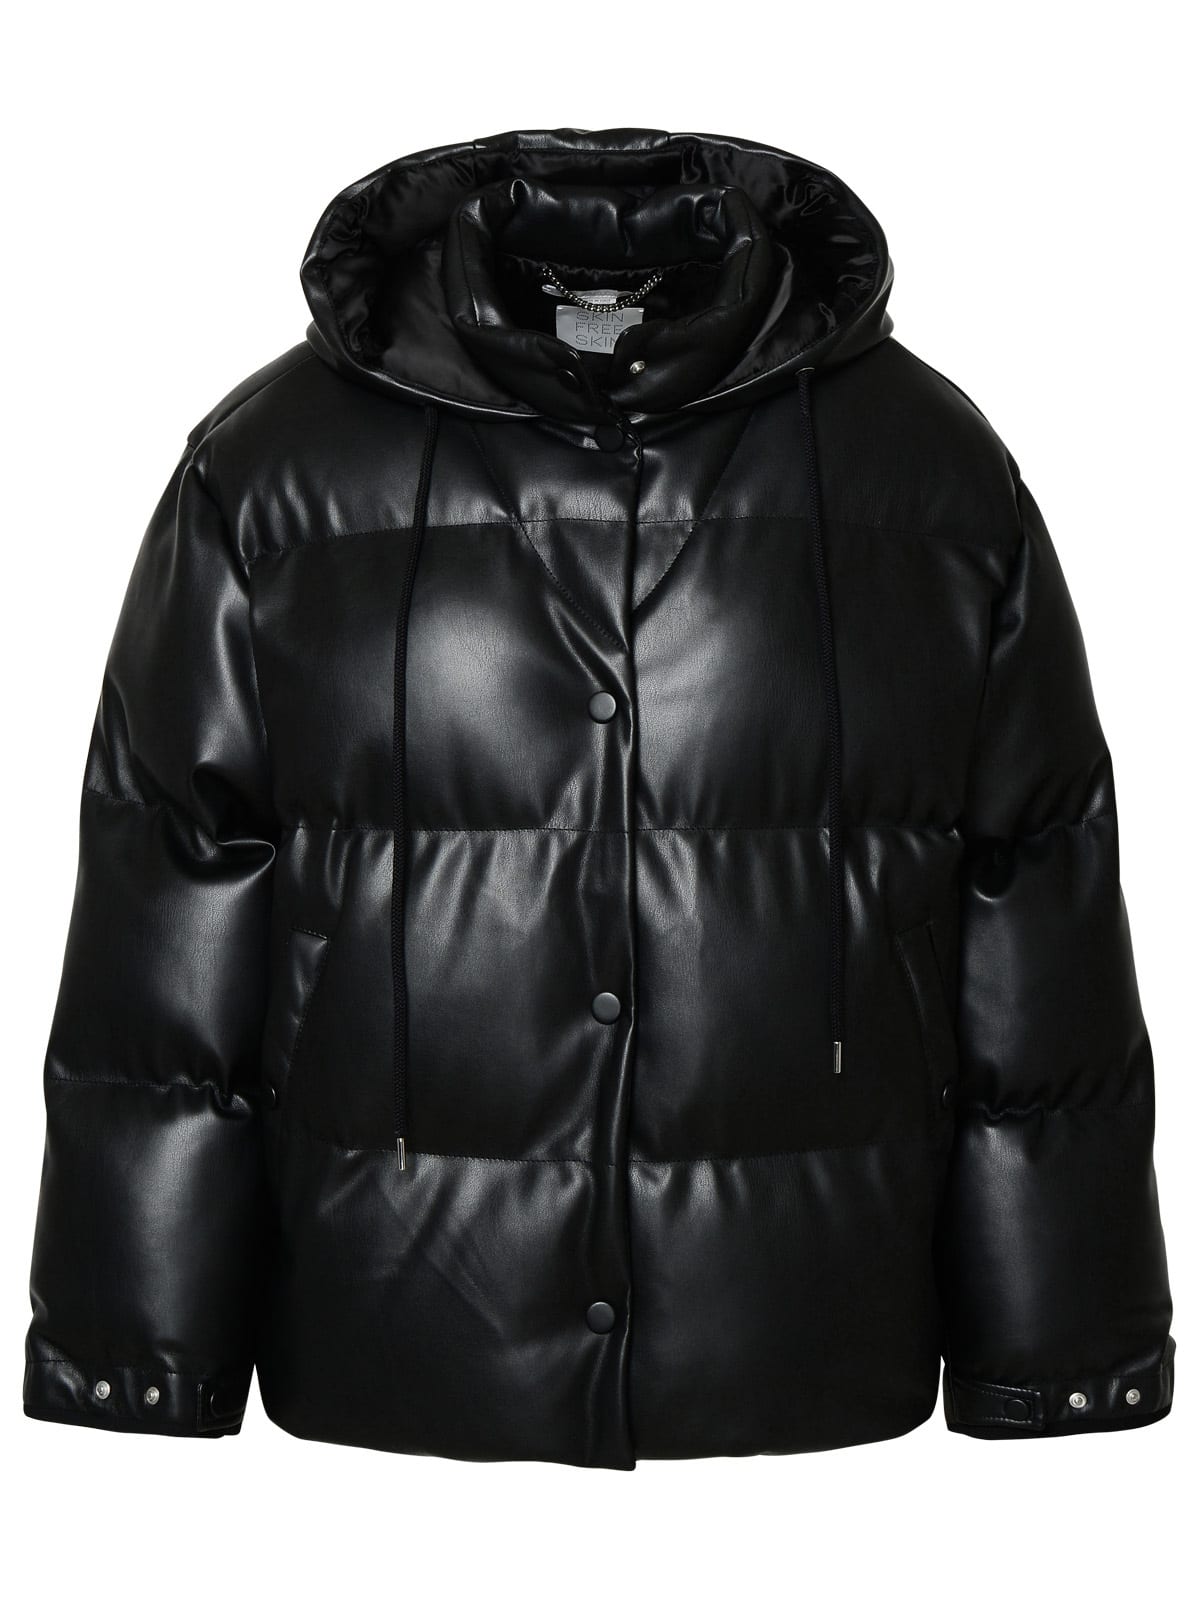 Stella Mccartney Altermat Black Imitation Leather Down Jacket